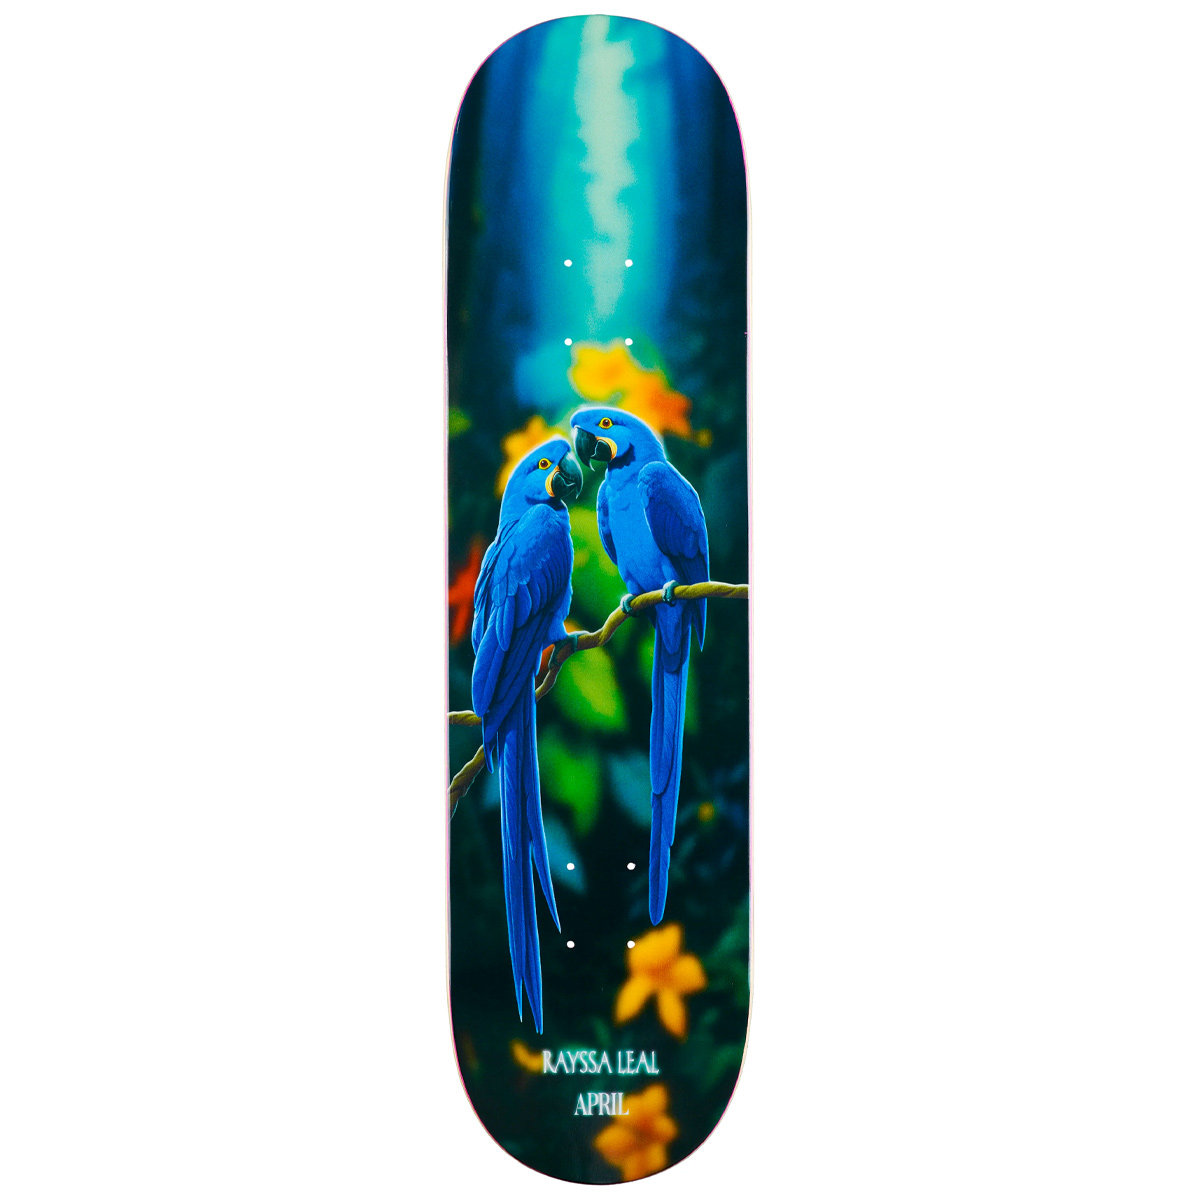 April Skateboard Deck Rayssa Leal 8.25" (blue macow)